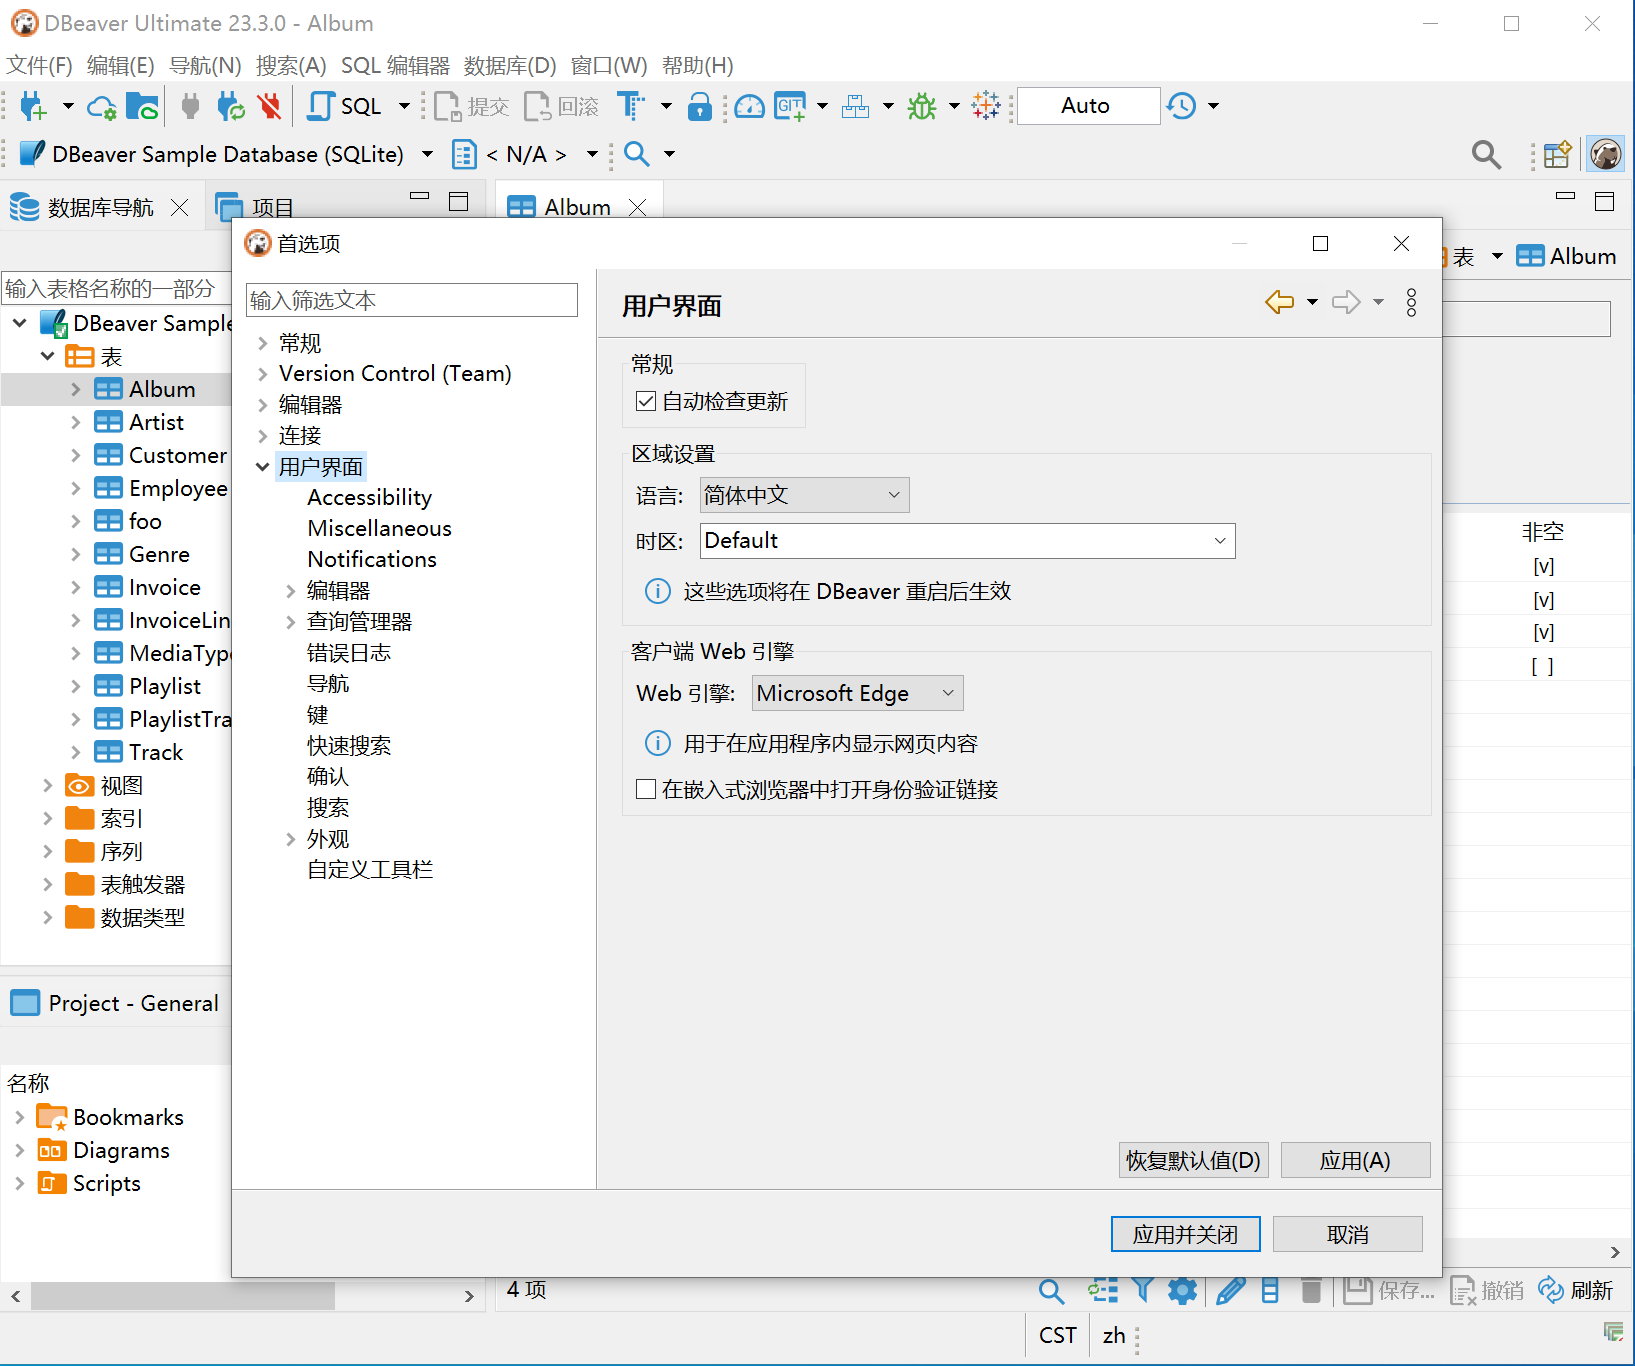 DBeaver Ultimate 23.3.0 x64 Multilingual 多语言中文注册版